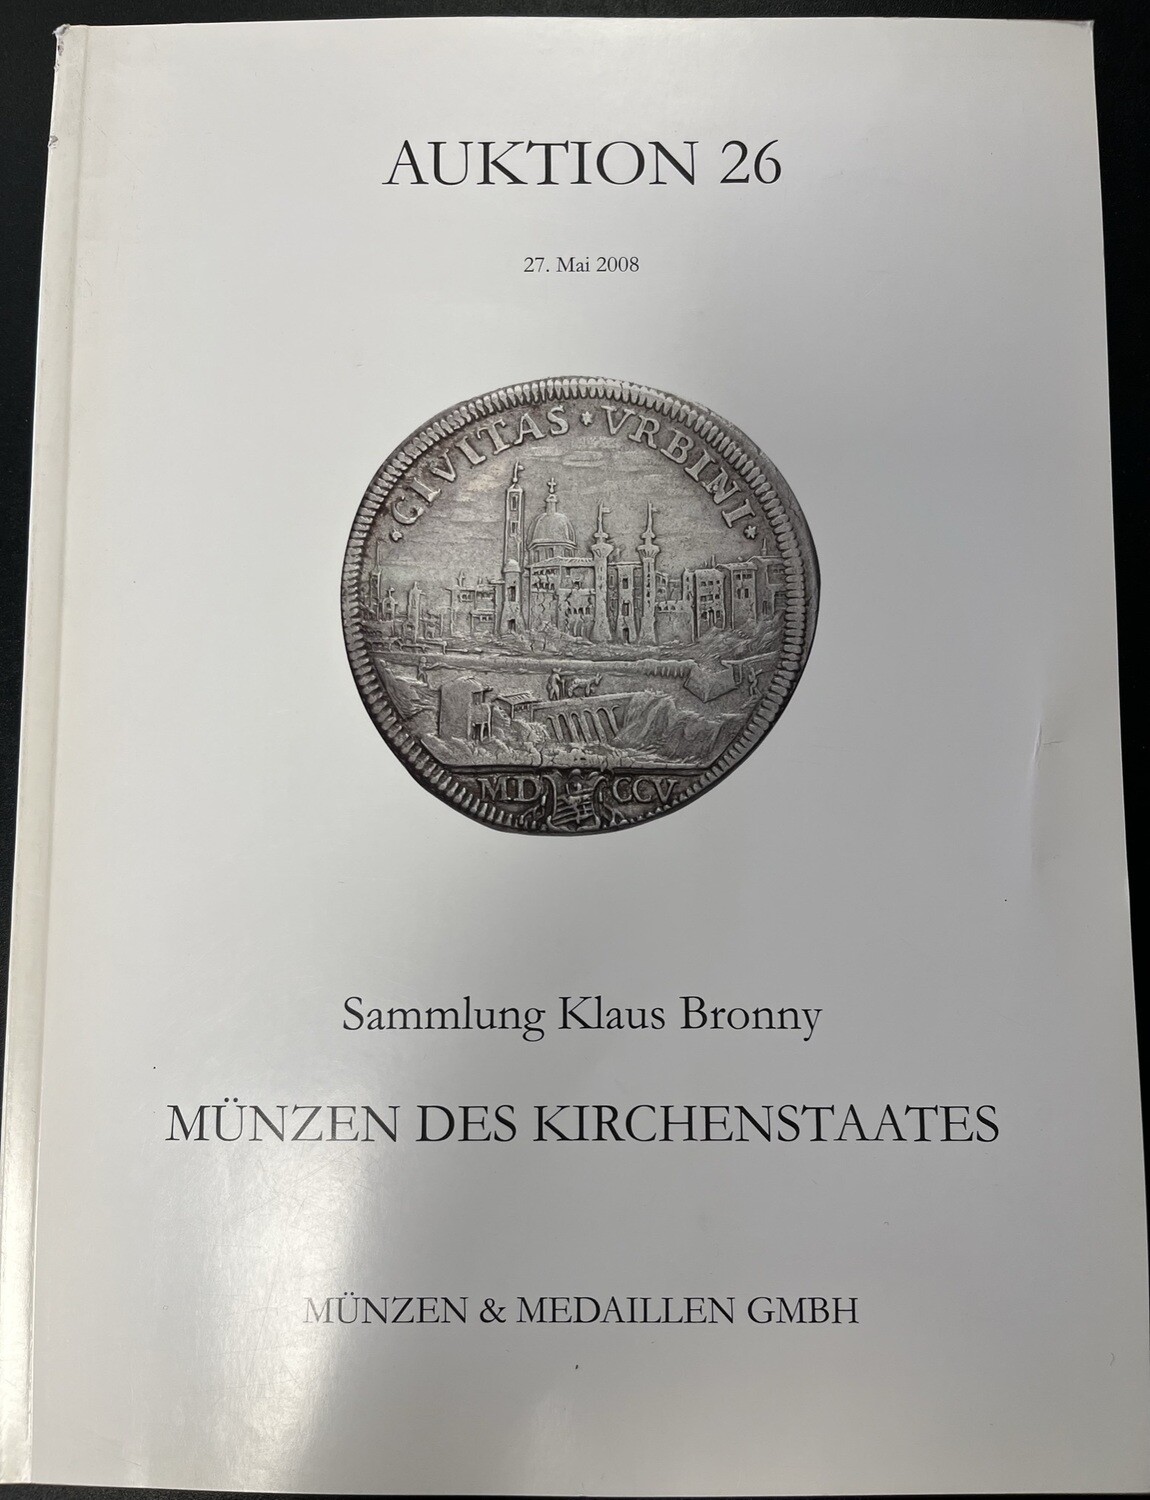 Slg. Klaus Bronny Münzen des Kirchenstaats